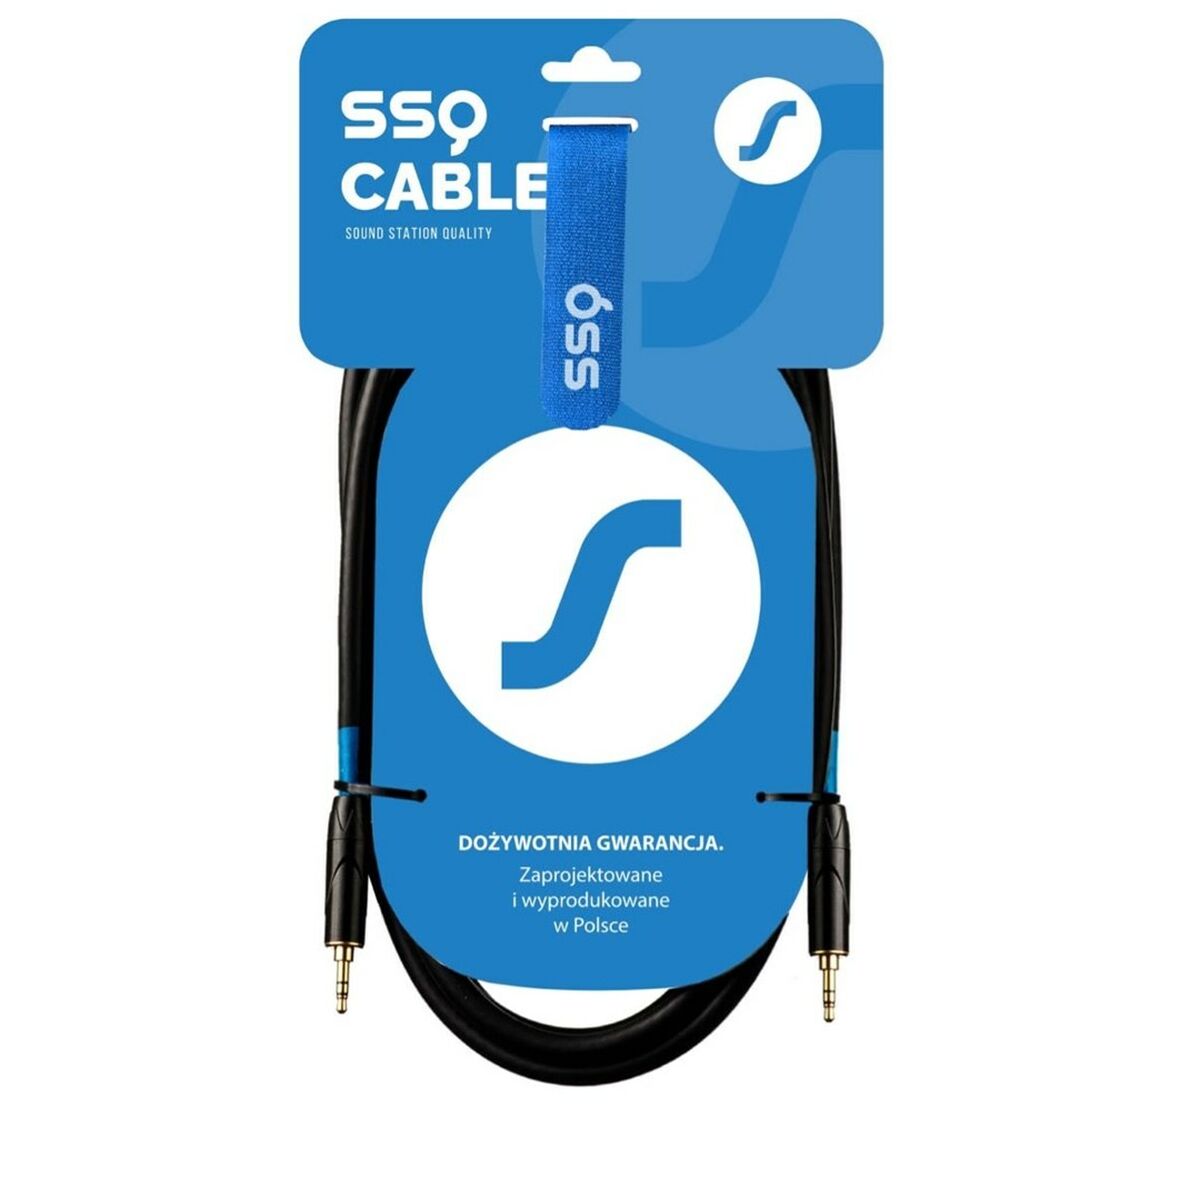 USB Cable Sound station quality (SSQ) SS-1425 Black 2 m